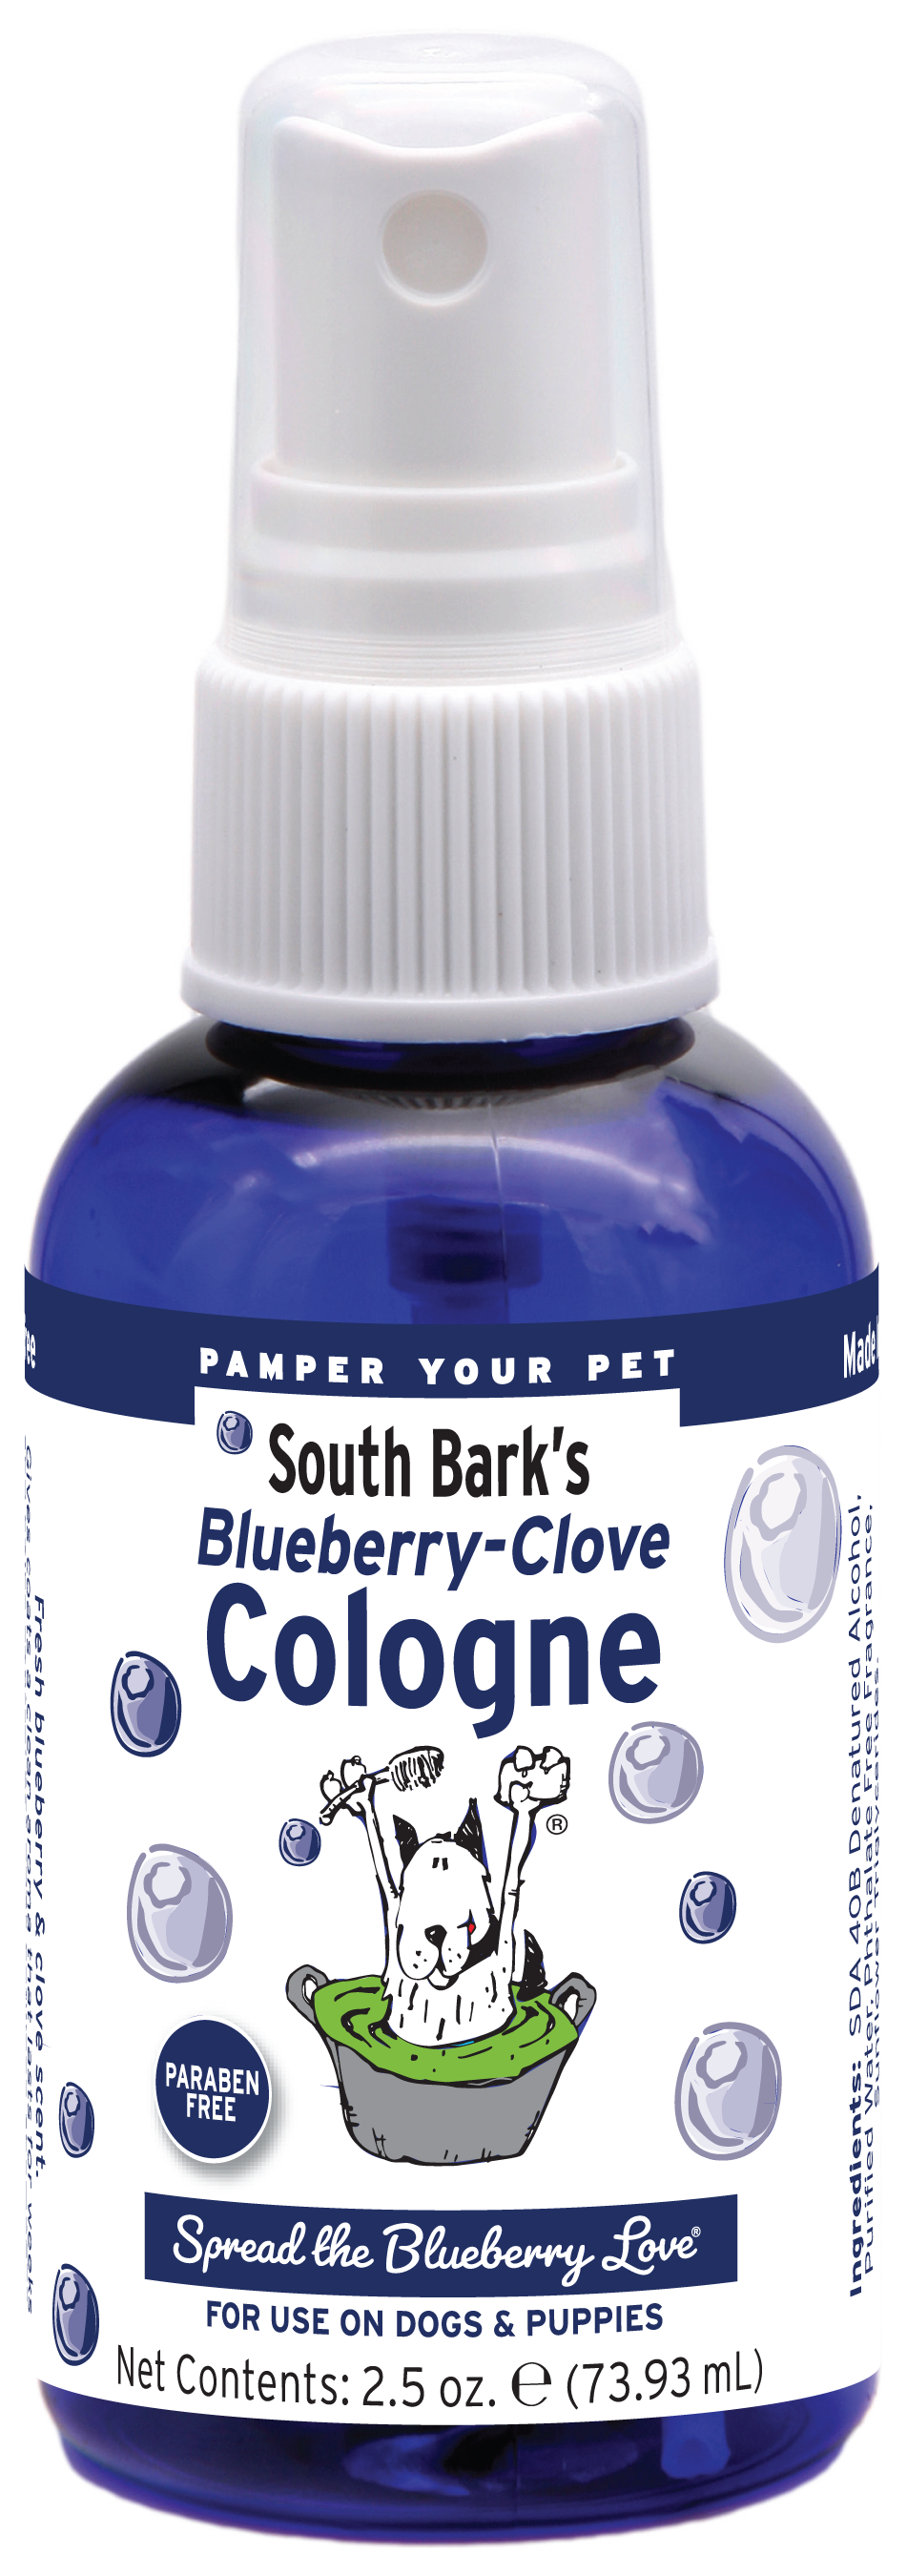 South Bark Blueberry-Clove Pet Cologne